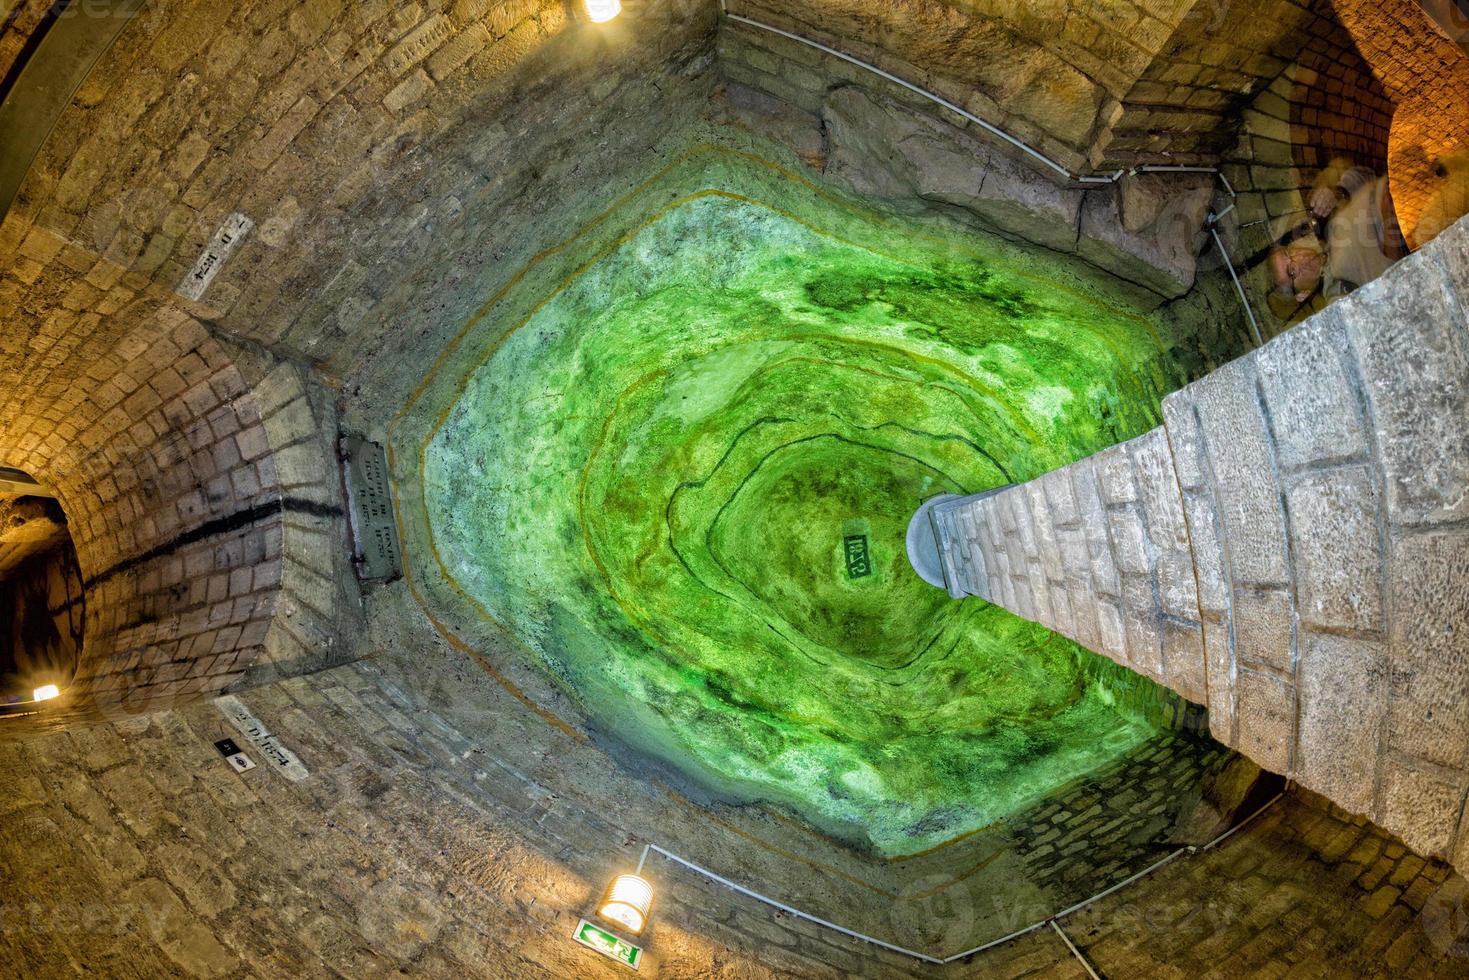 Paris Catacombs green ceiling detail photo